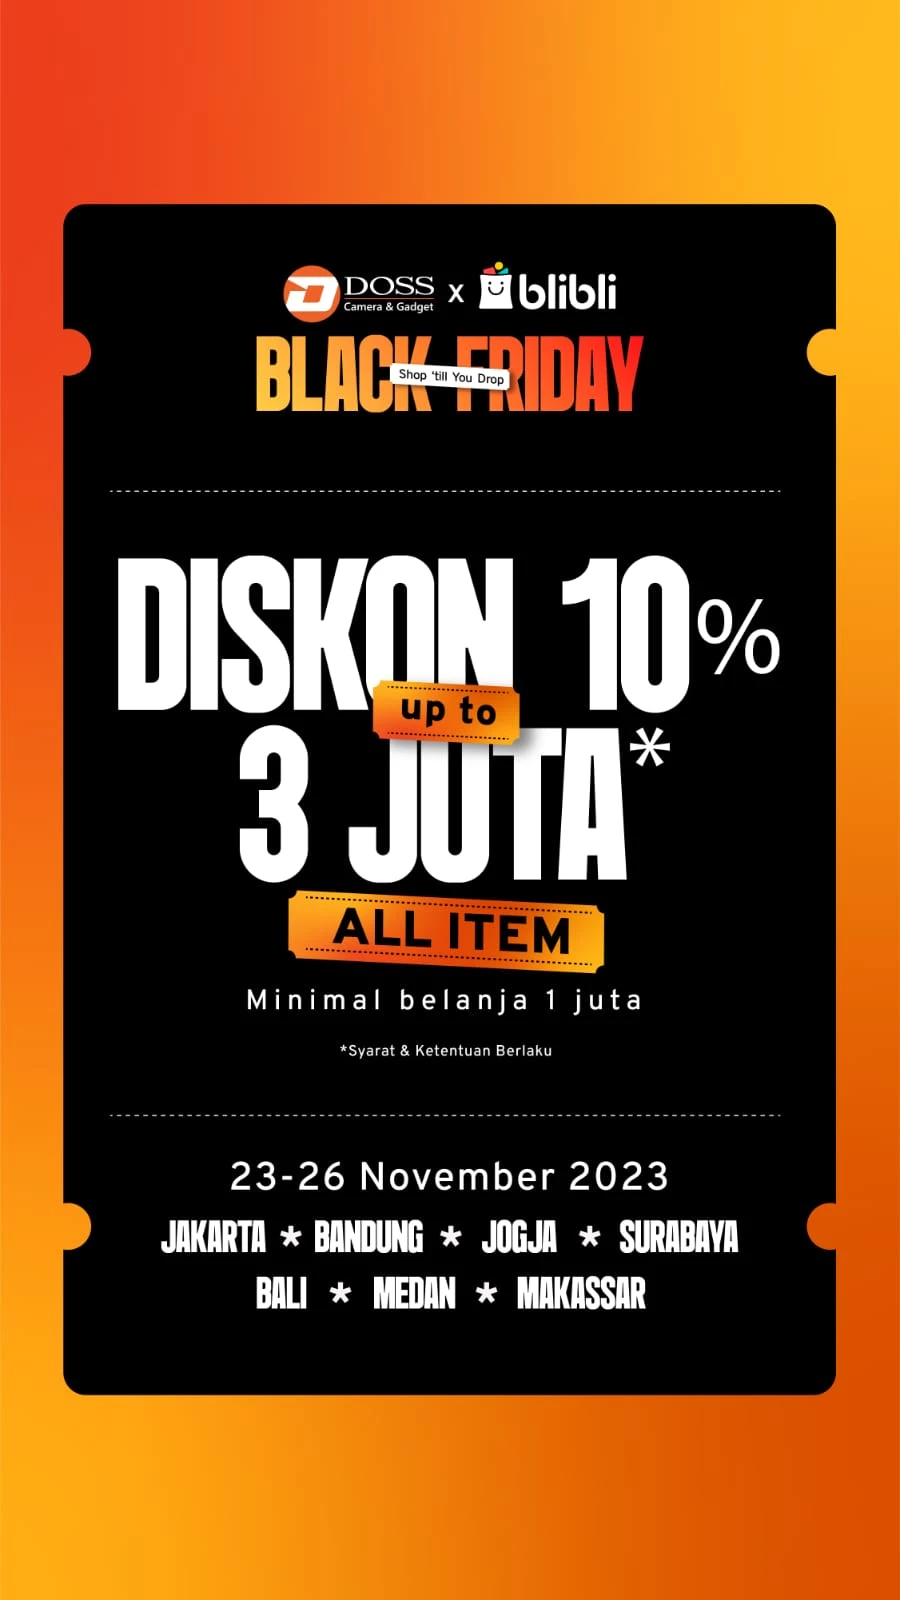 Yuk Nikmati Diskon 10% Up To 3 Juta All Item di DOSS Black Friday x Blibli 23-26 November 2023